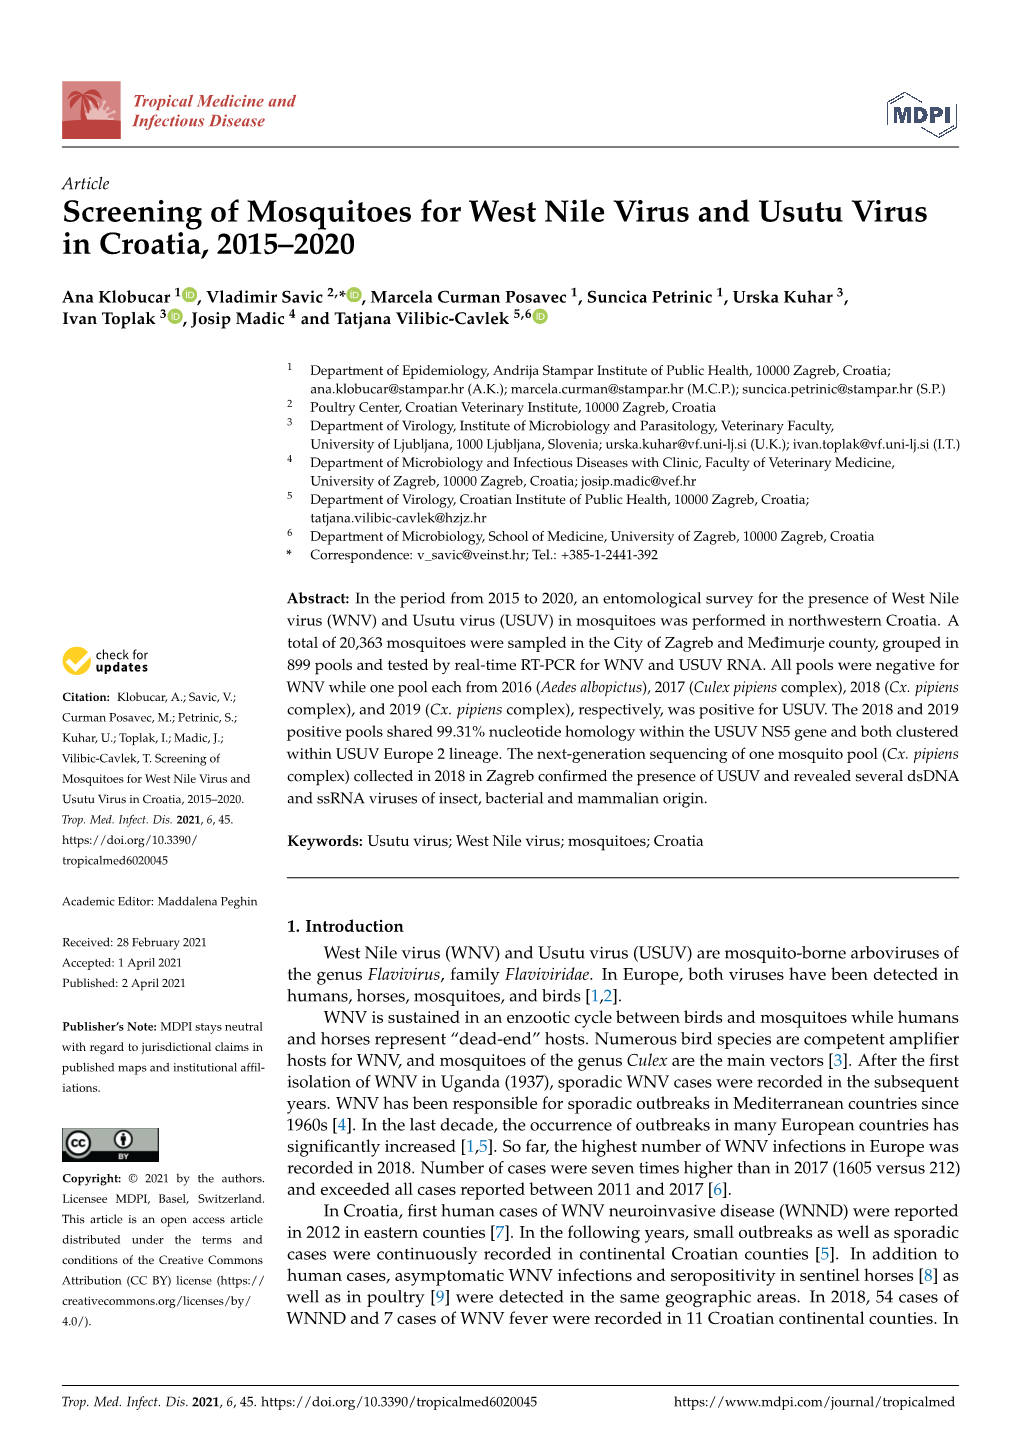 Screening of Mosquitoes for West Nile Virus and Usutu Virus in Croatia, 2015–2020